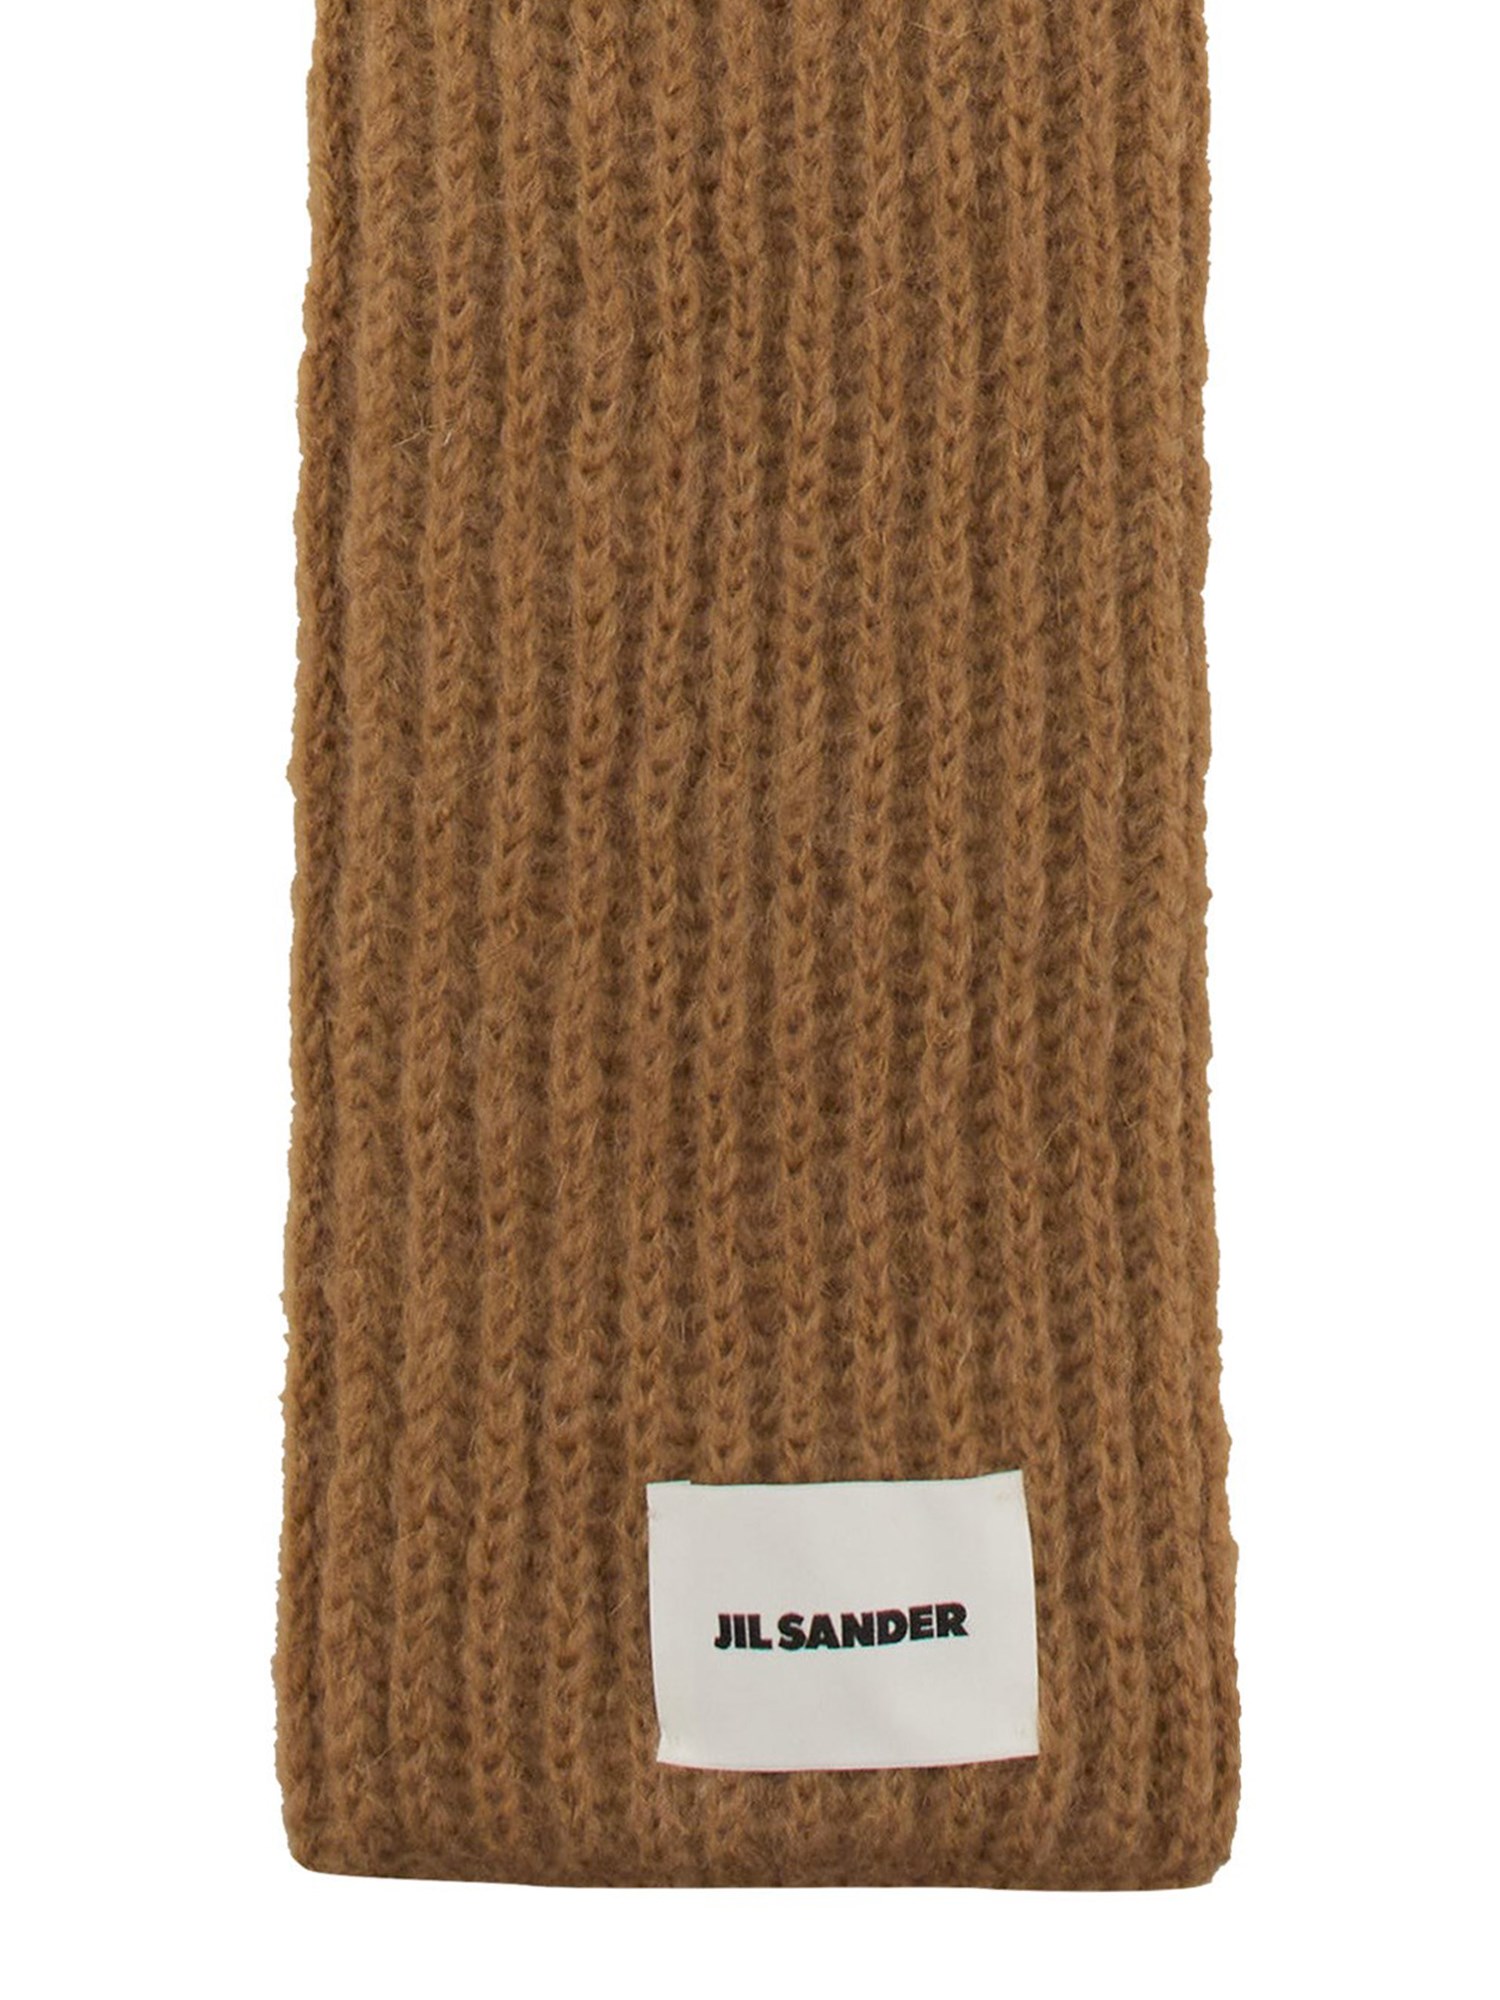 Jil Sander jil sander scarf with logo